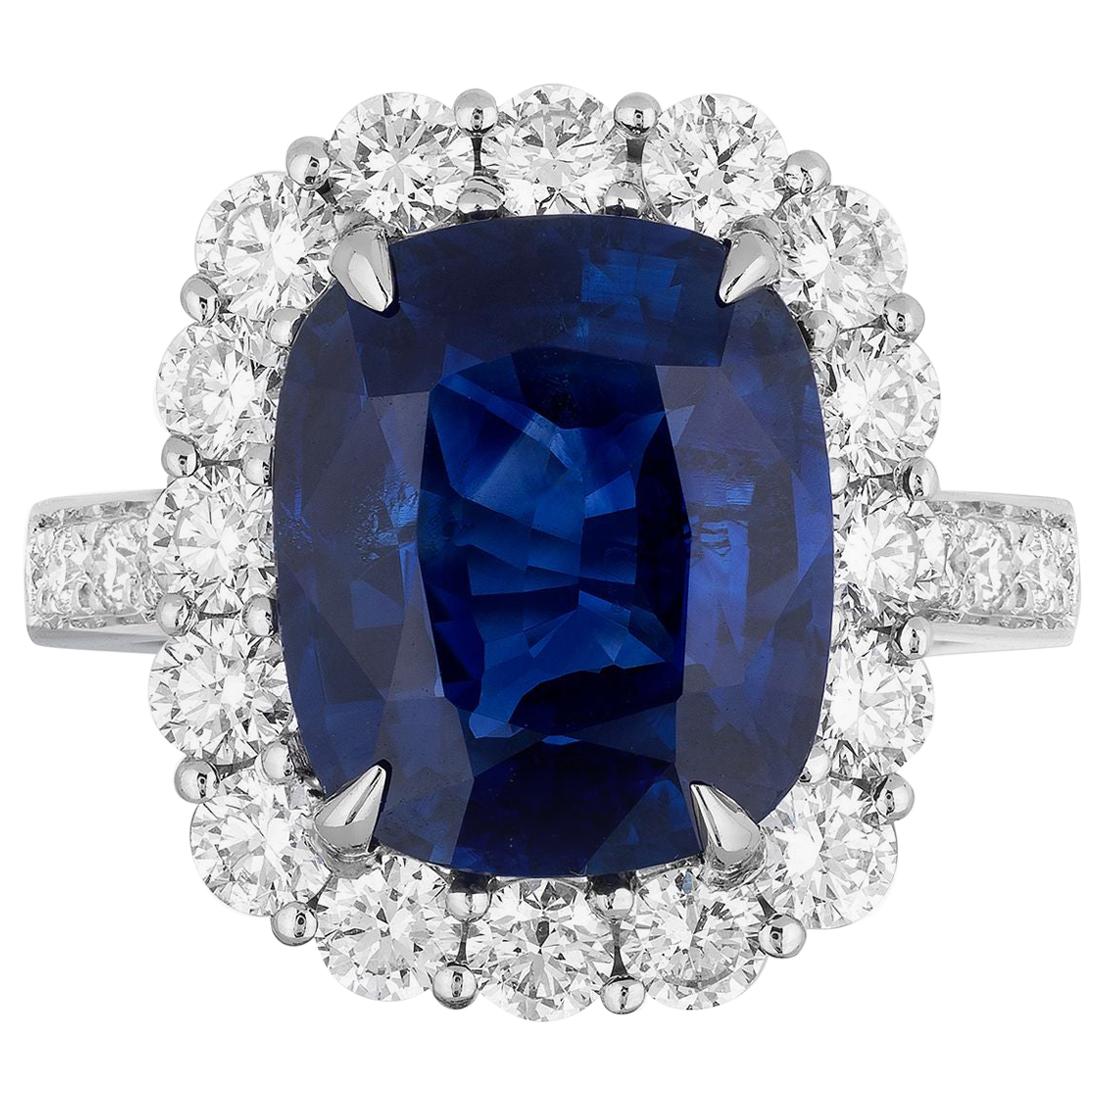 CDC Certified 7.59 Carat Cushion Shape Blue Sapphire Diamond Cocktail Ring